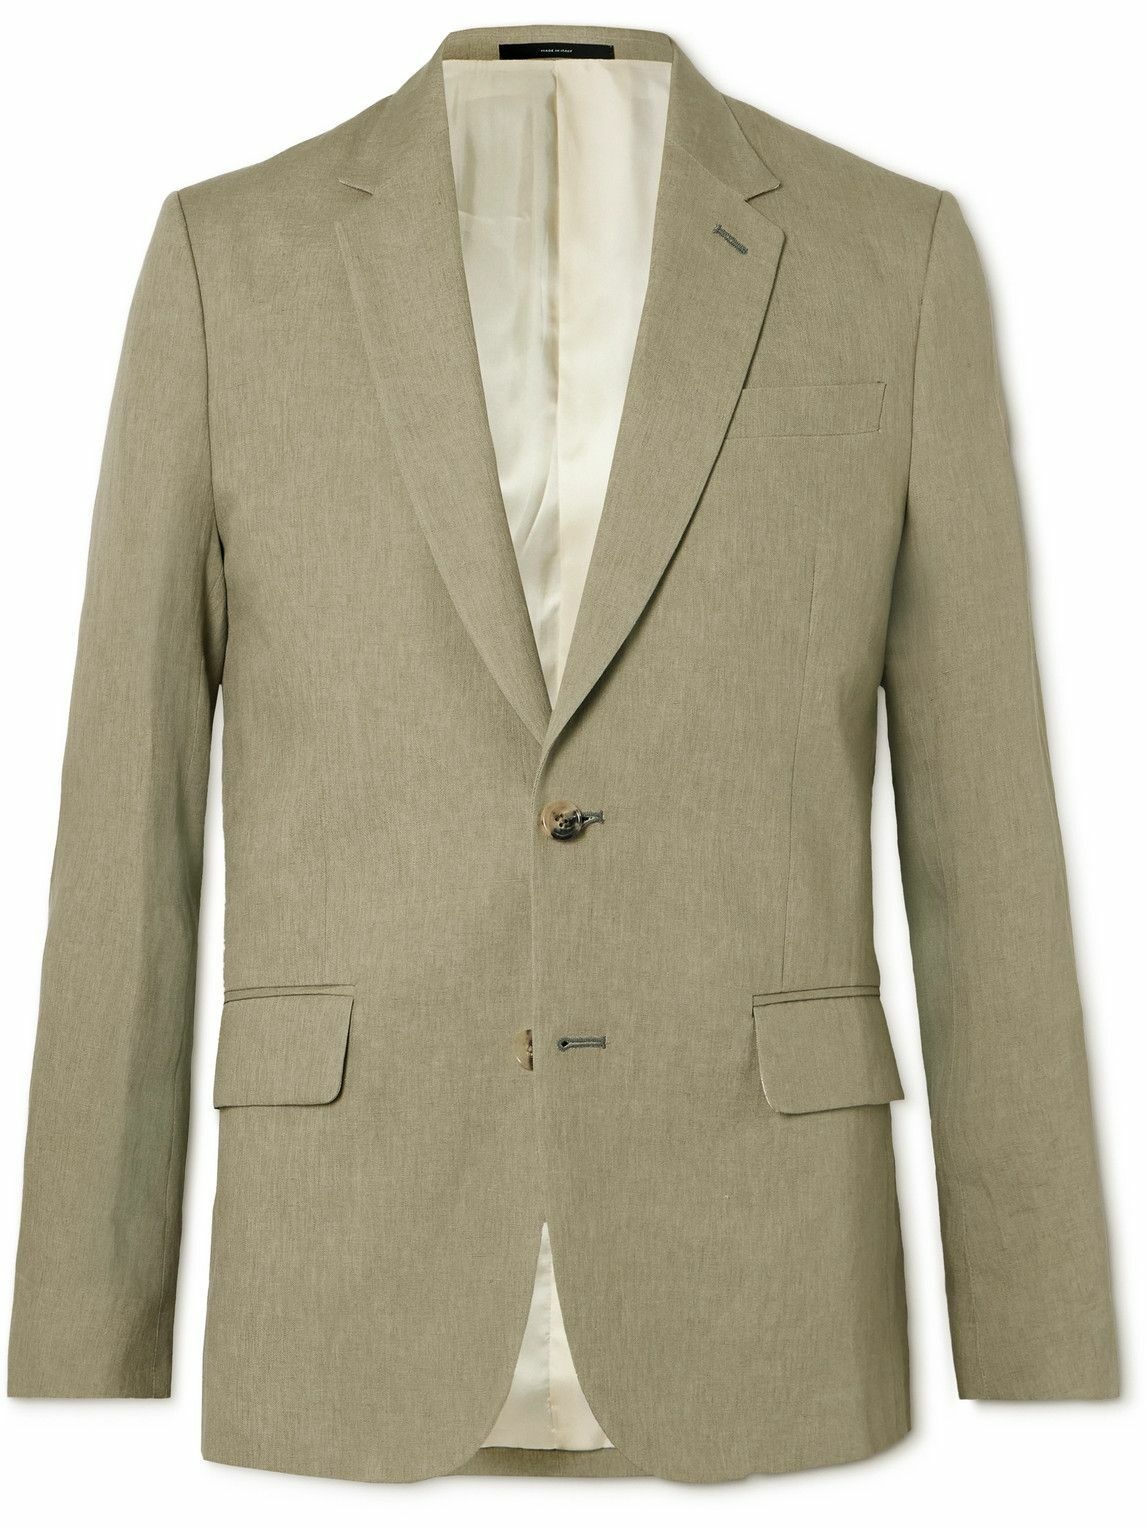 Paul Smith - Linen Suit Jacket - Green Paul Smith